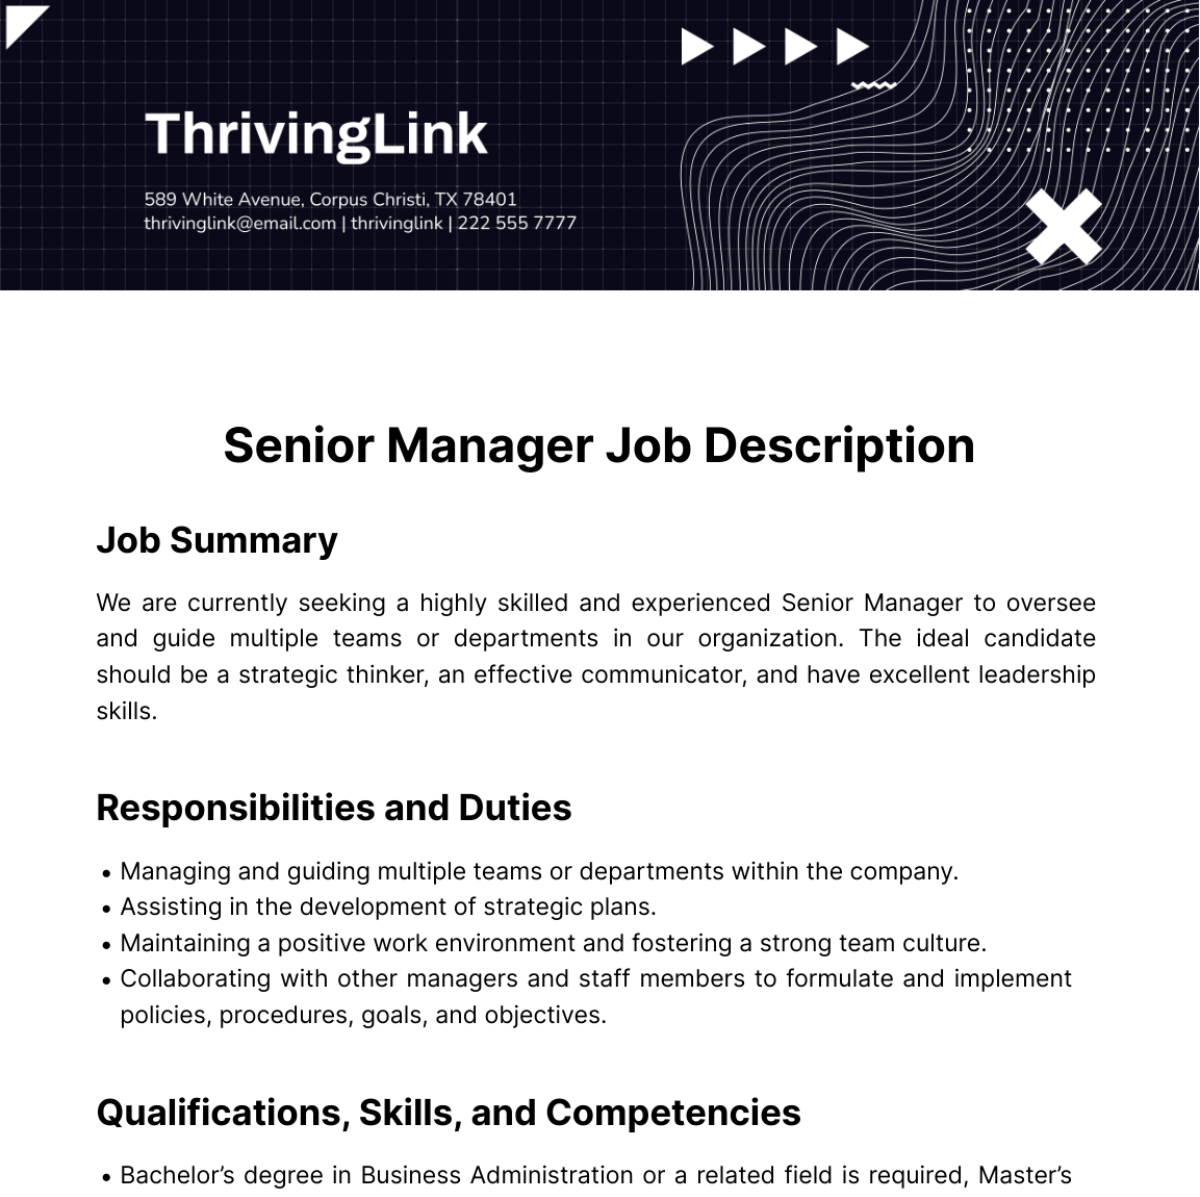 Senior Manager Job Description Template